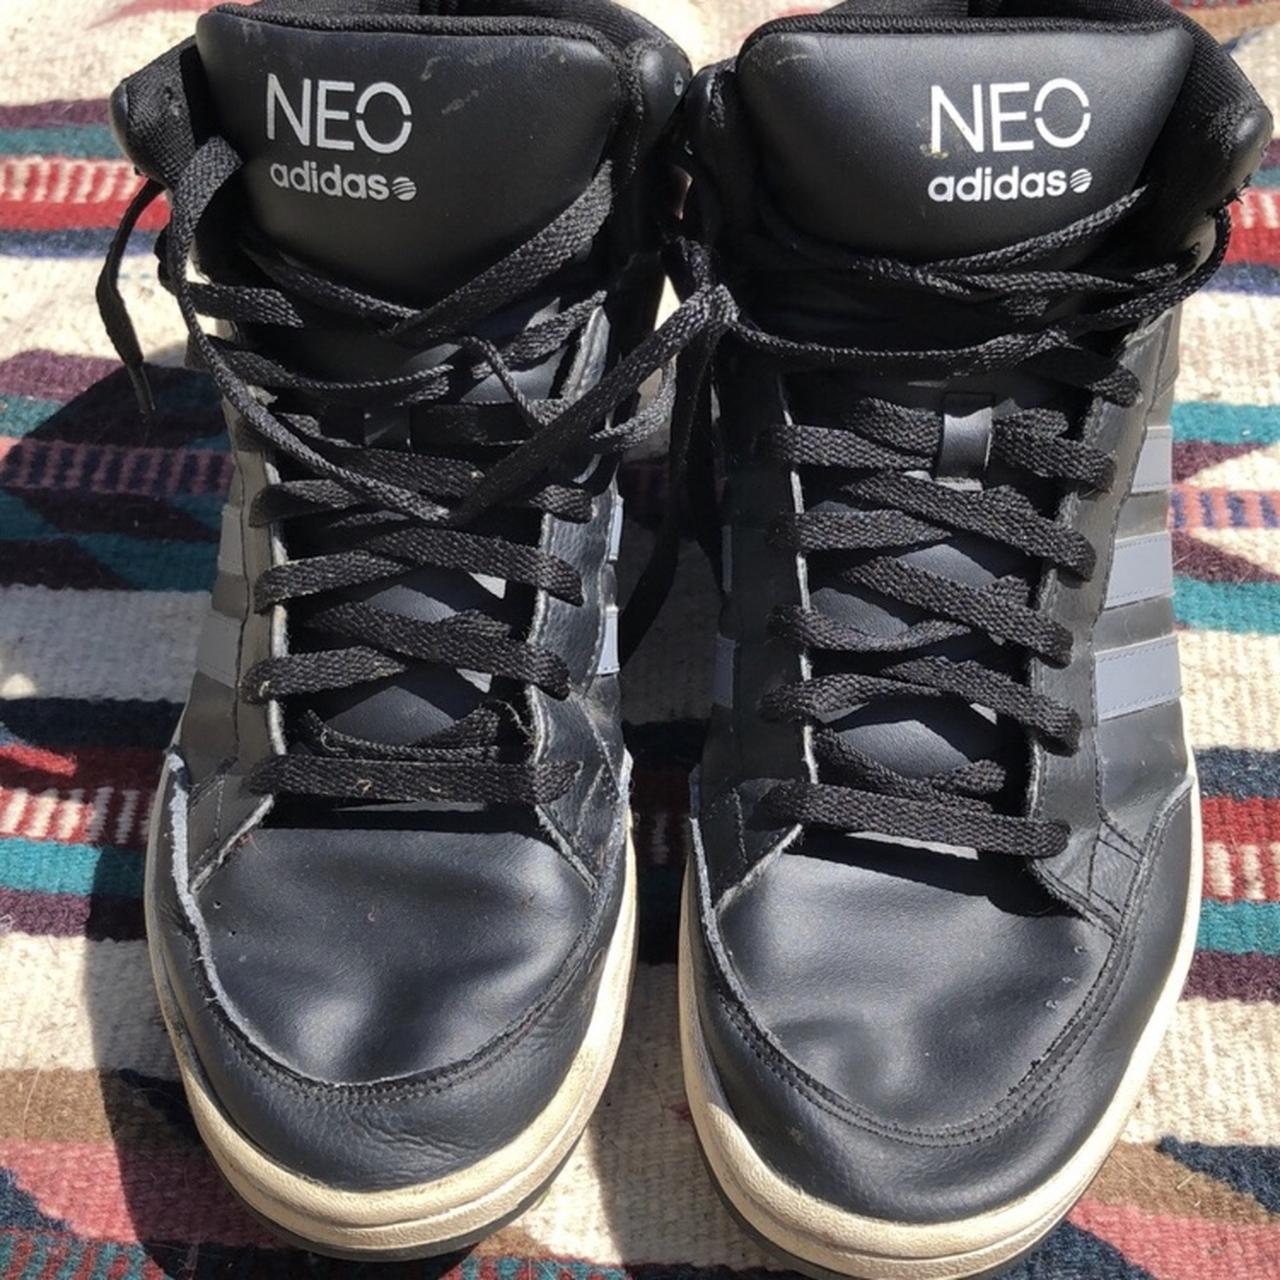 Beugel apotheker Scheur Like new condition Adidas high top NEO sneakers in... - Depop